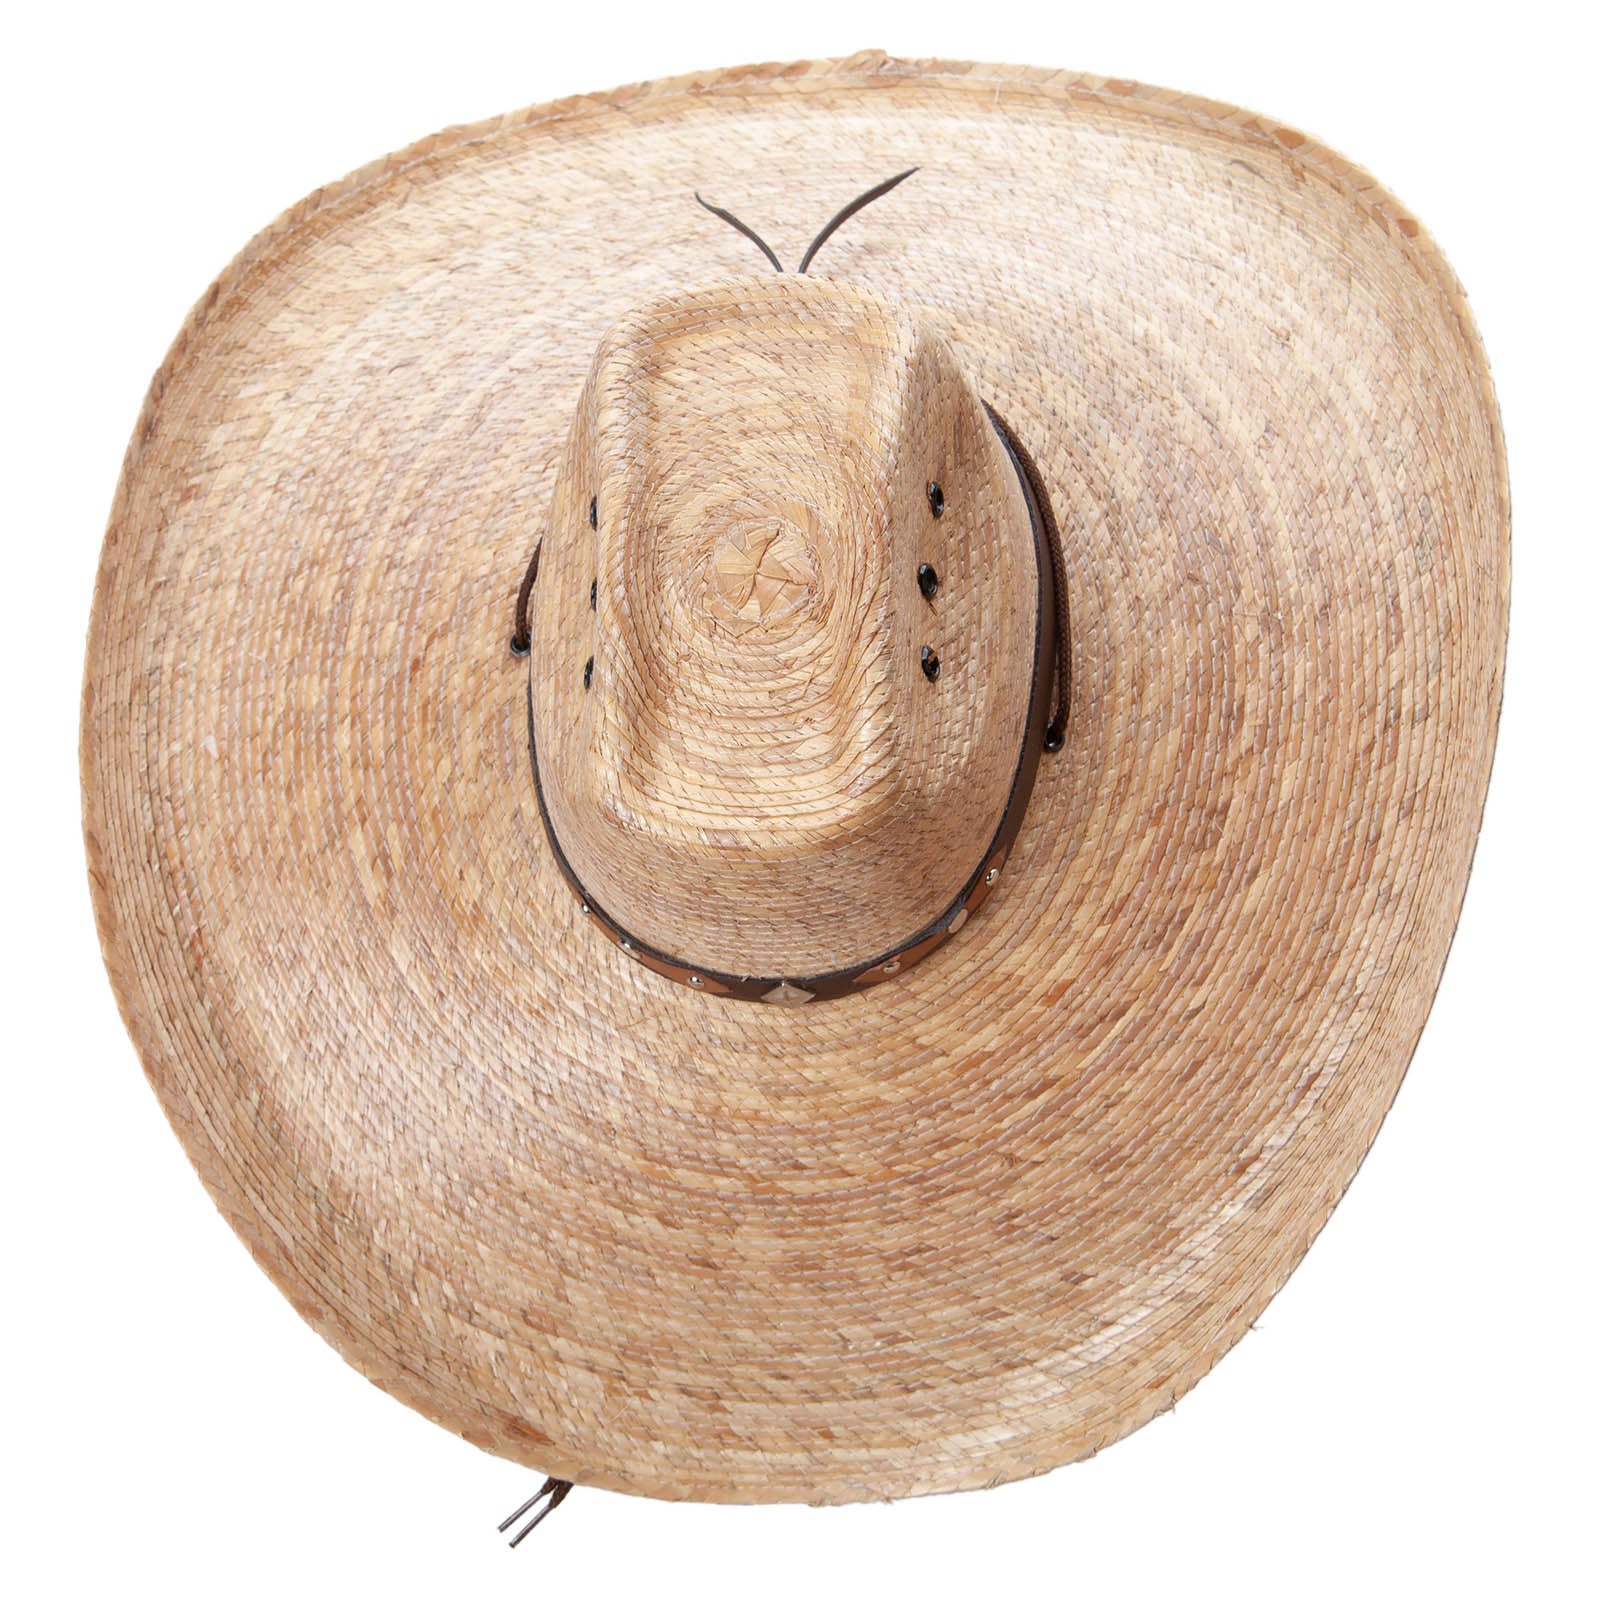 Mexican Style Wide Brim Straw Hat, Safari/Gambler Hat